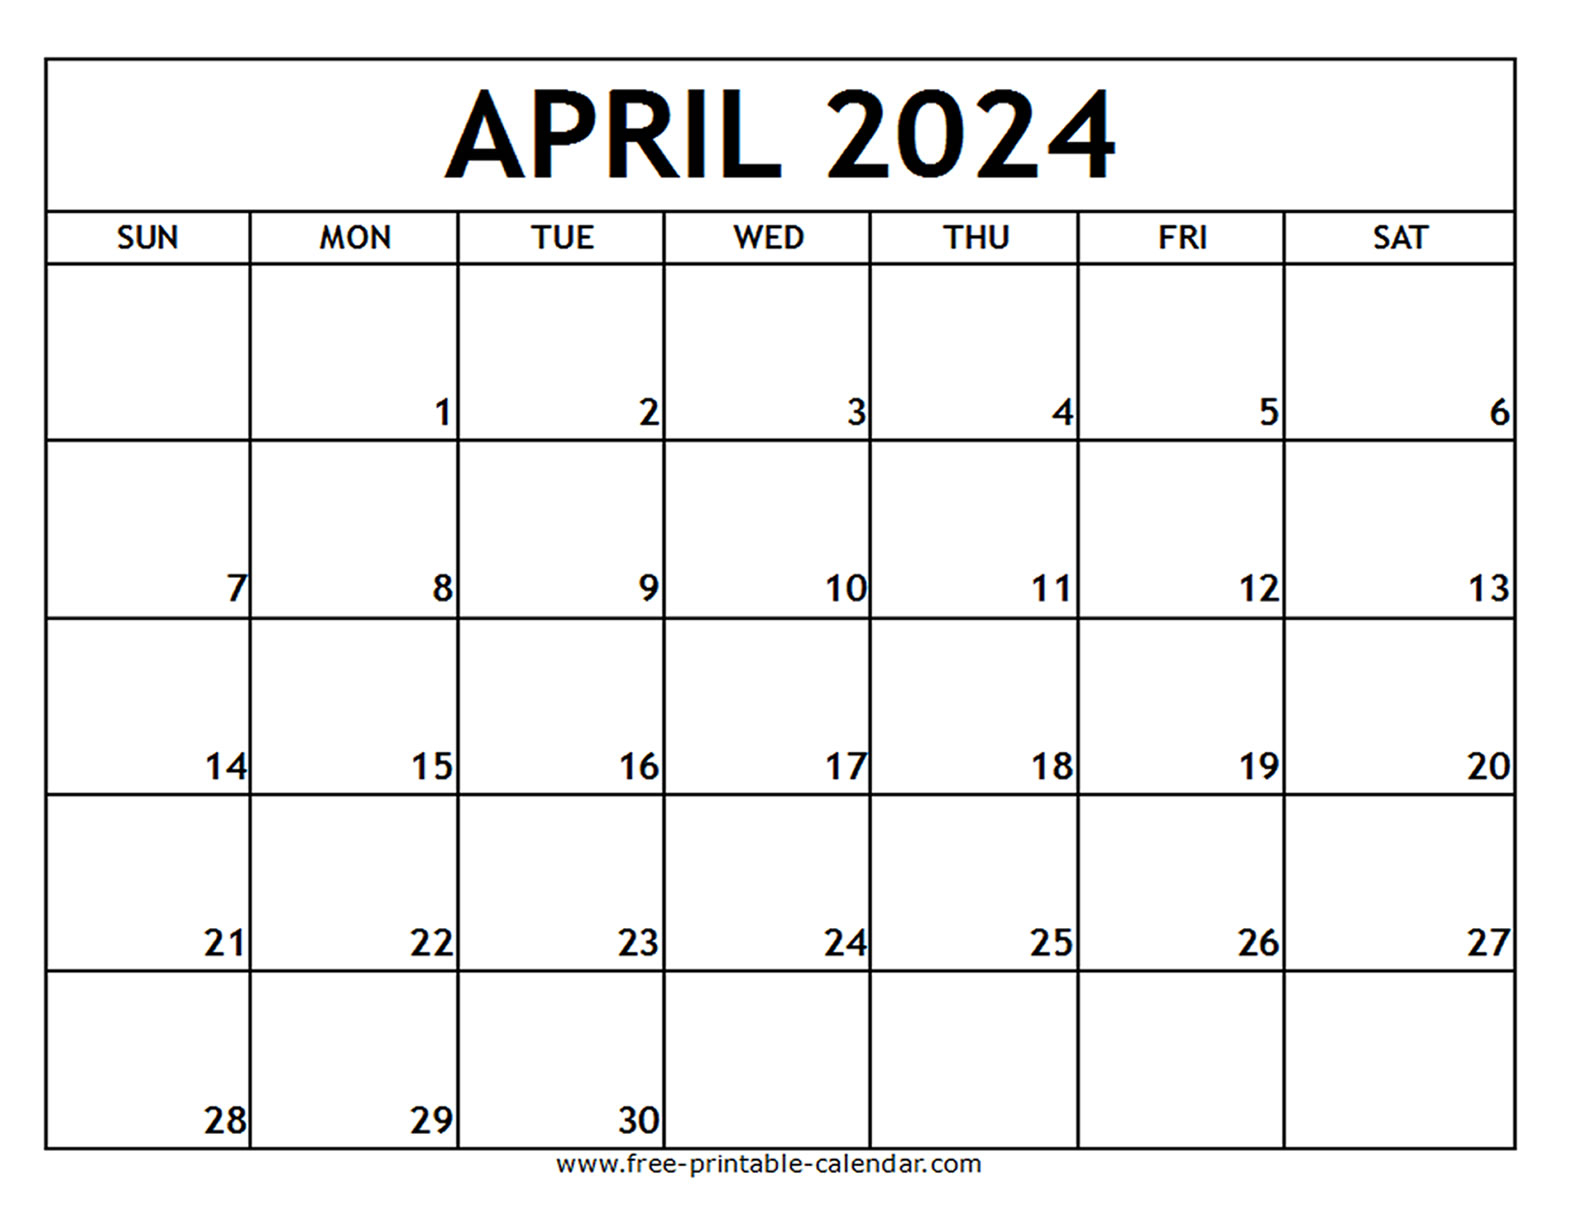 April 2024 Printable Calendar - Free-Printable-Calendar for April 2024 Calendar Printable Pdf